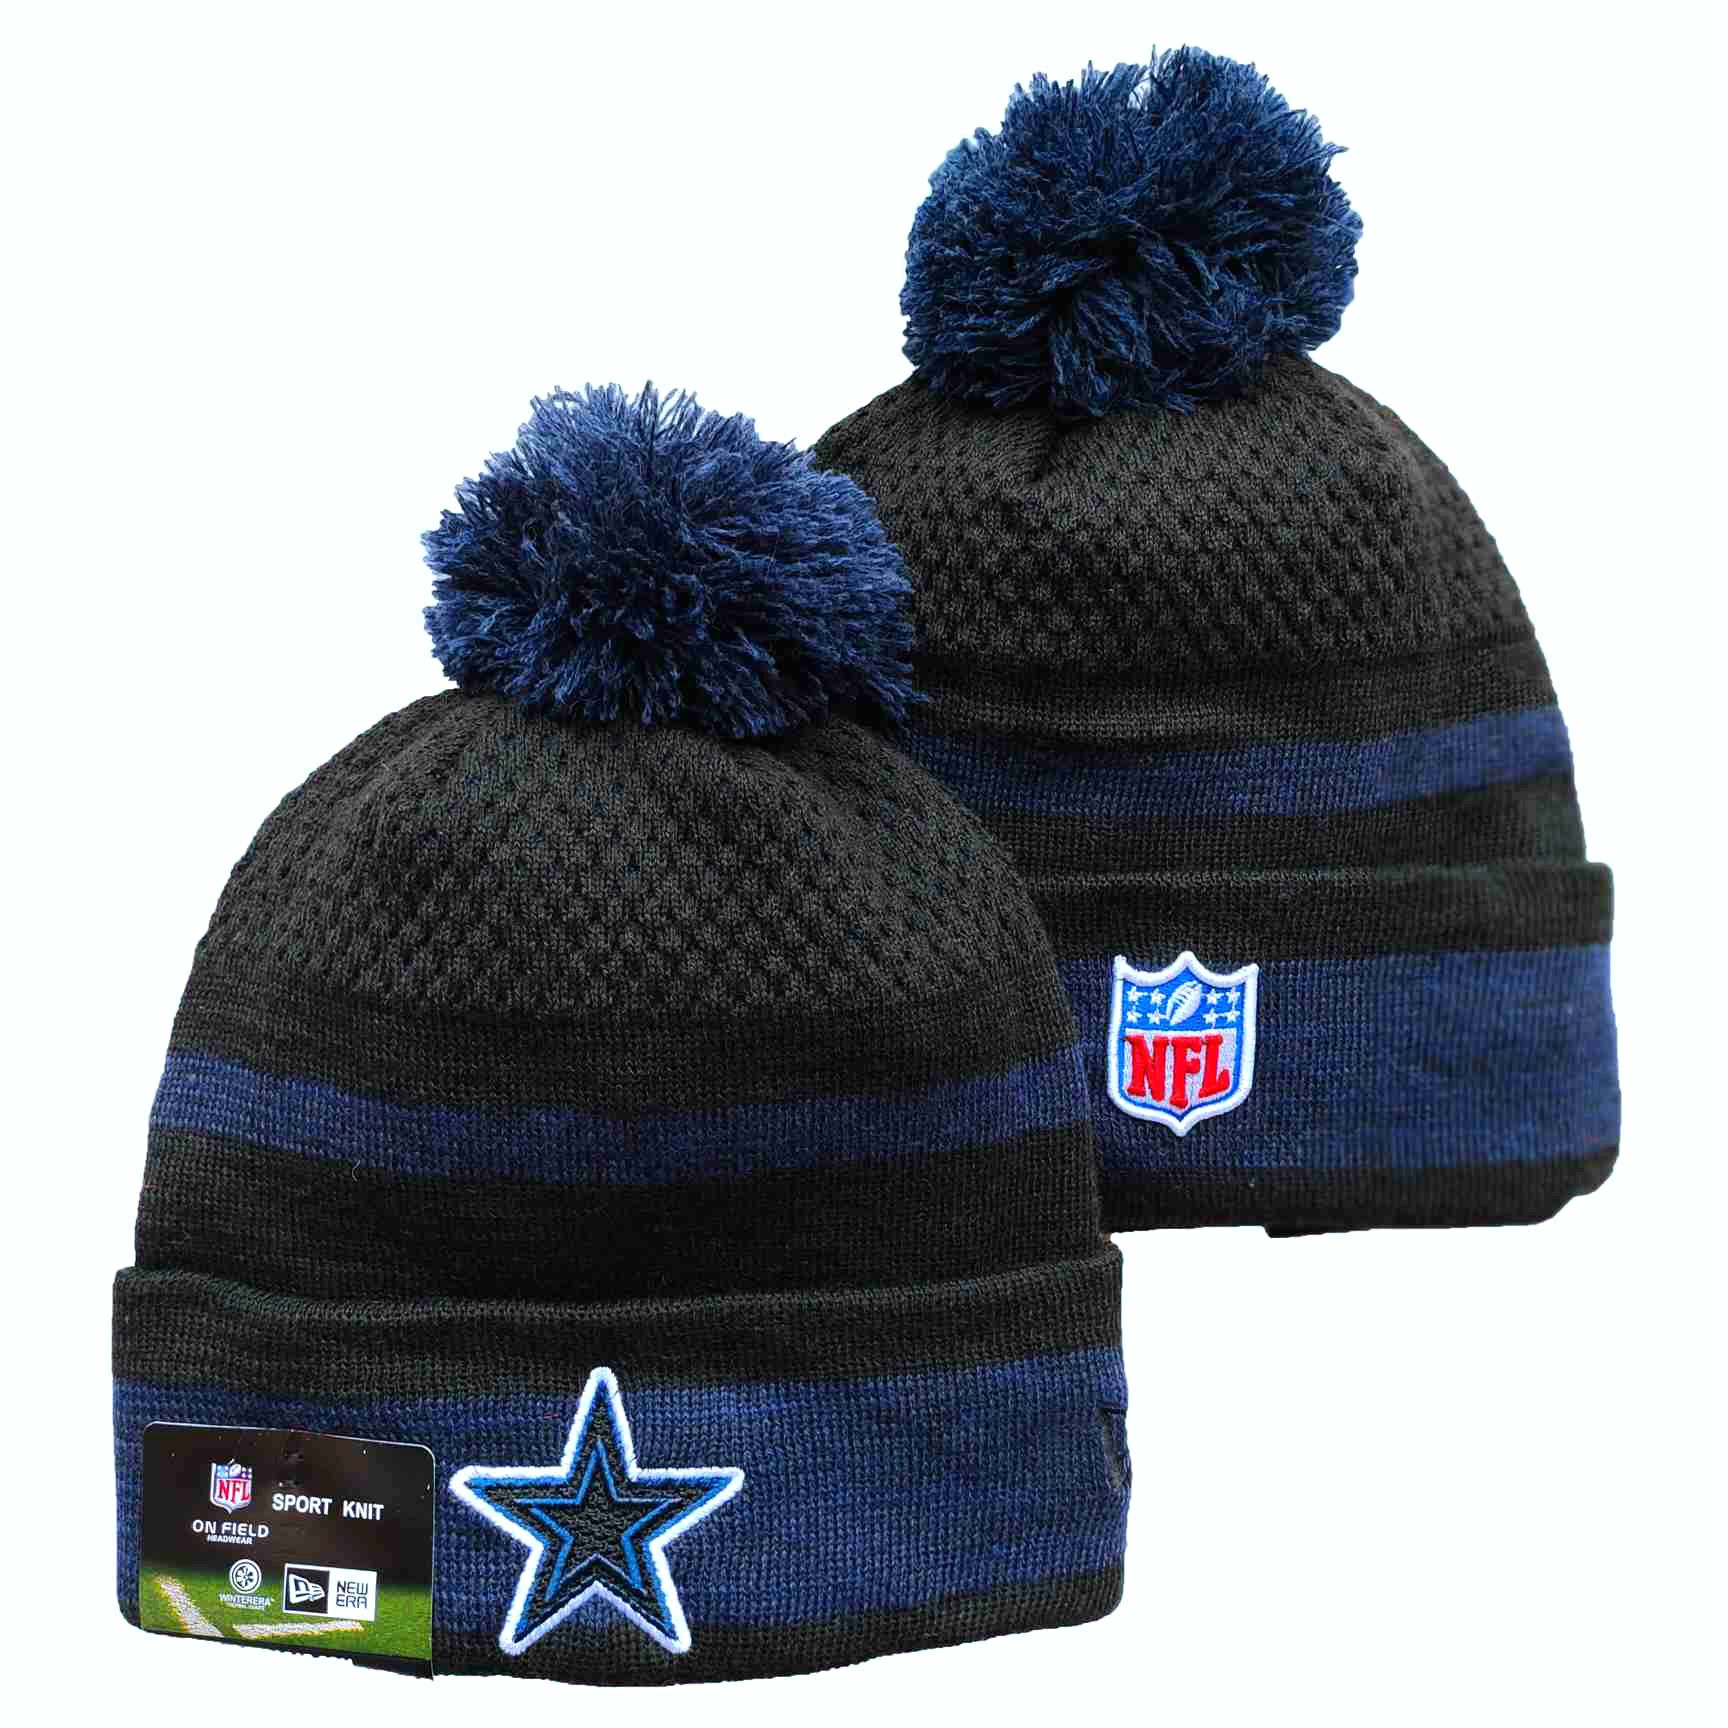 NFL Dallas Cowboys Beanies Knit Hats-YD973